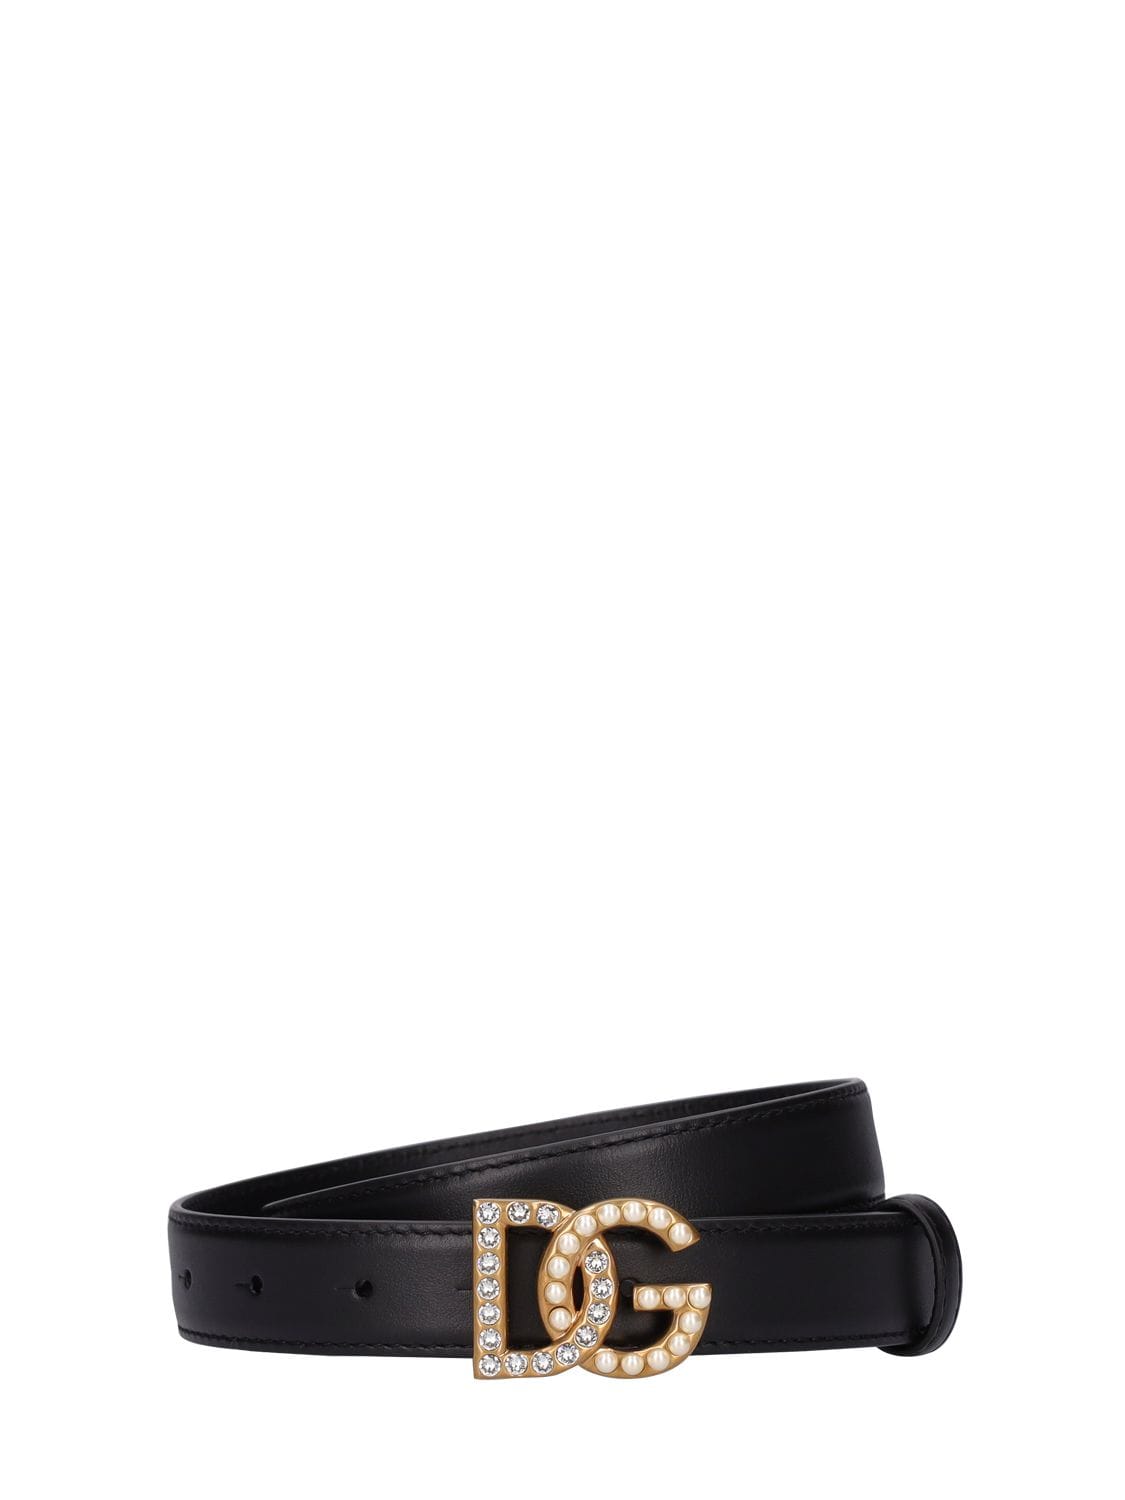 Dolce & Gabbana Dg 40mm Swarovski Crystal & Pearl Leather Belt In Black / Crystal